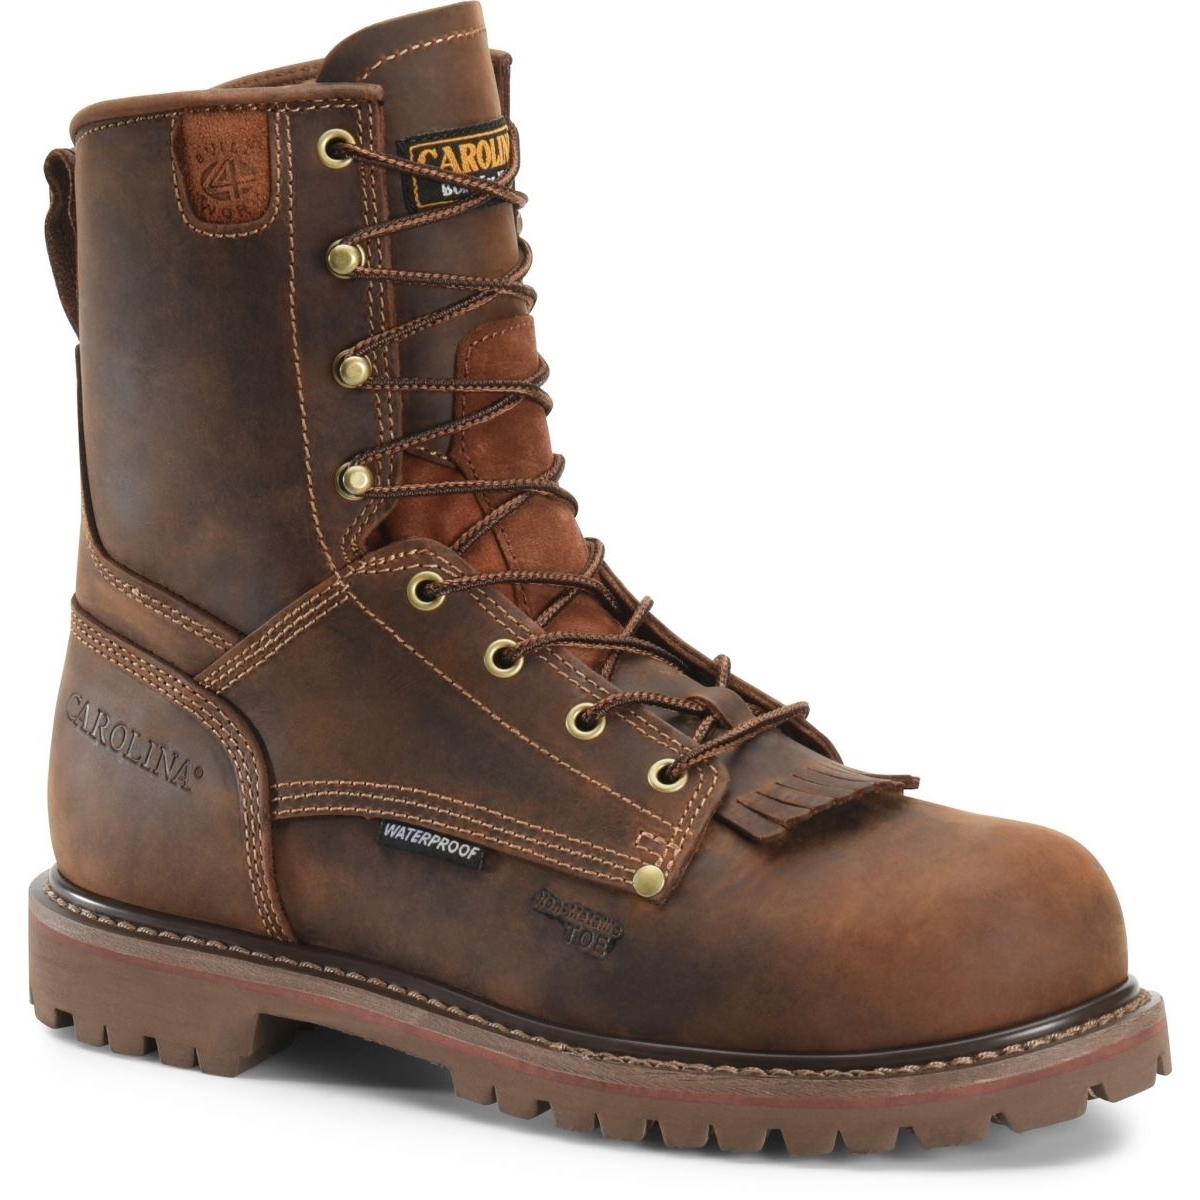 CAROLINA Men's 28 Series 8 Composite Toe Waterproof Work Boot Brown - CA8528 DARK BROWN - DARK BROWN, 8